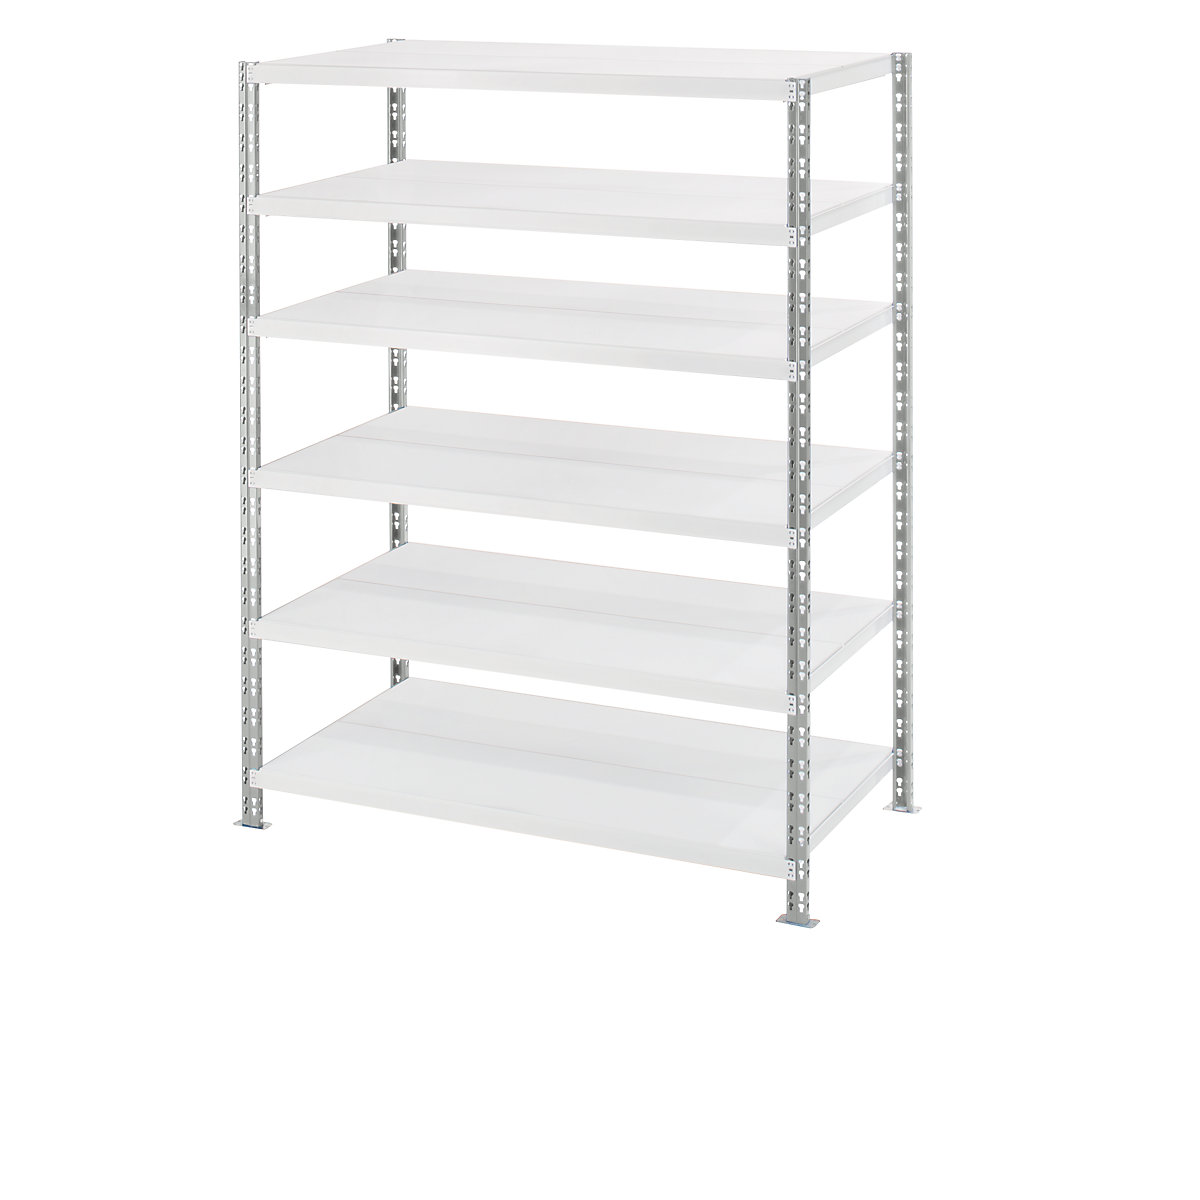 Wide span shelf unit with sheet steel shelves, depth 800 mm, standard shelf unit, HxW 1976 x 1550 mm